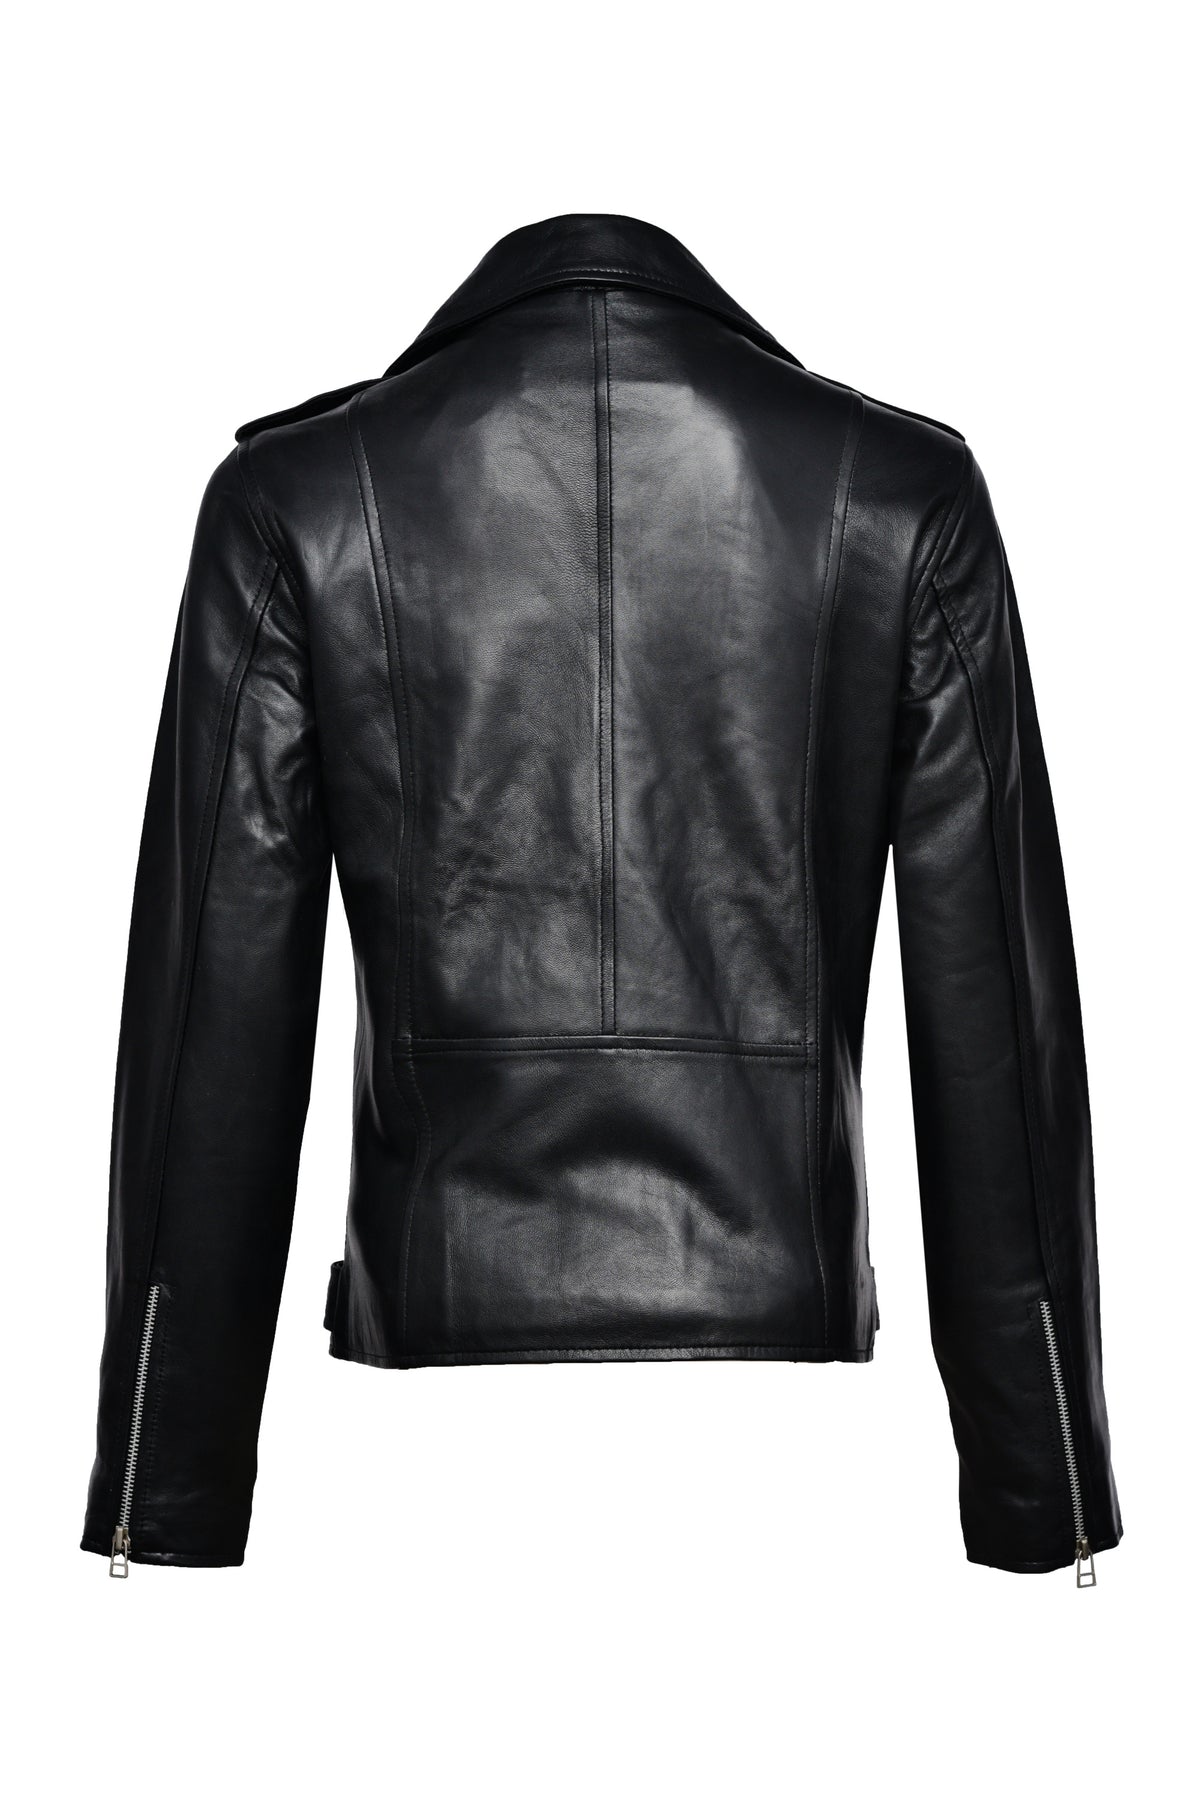 Shien Black Biker Leather Jacket | LEATHERWEAR